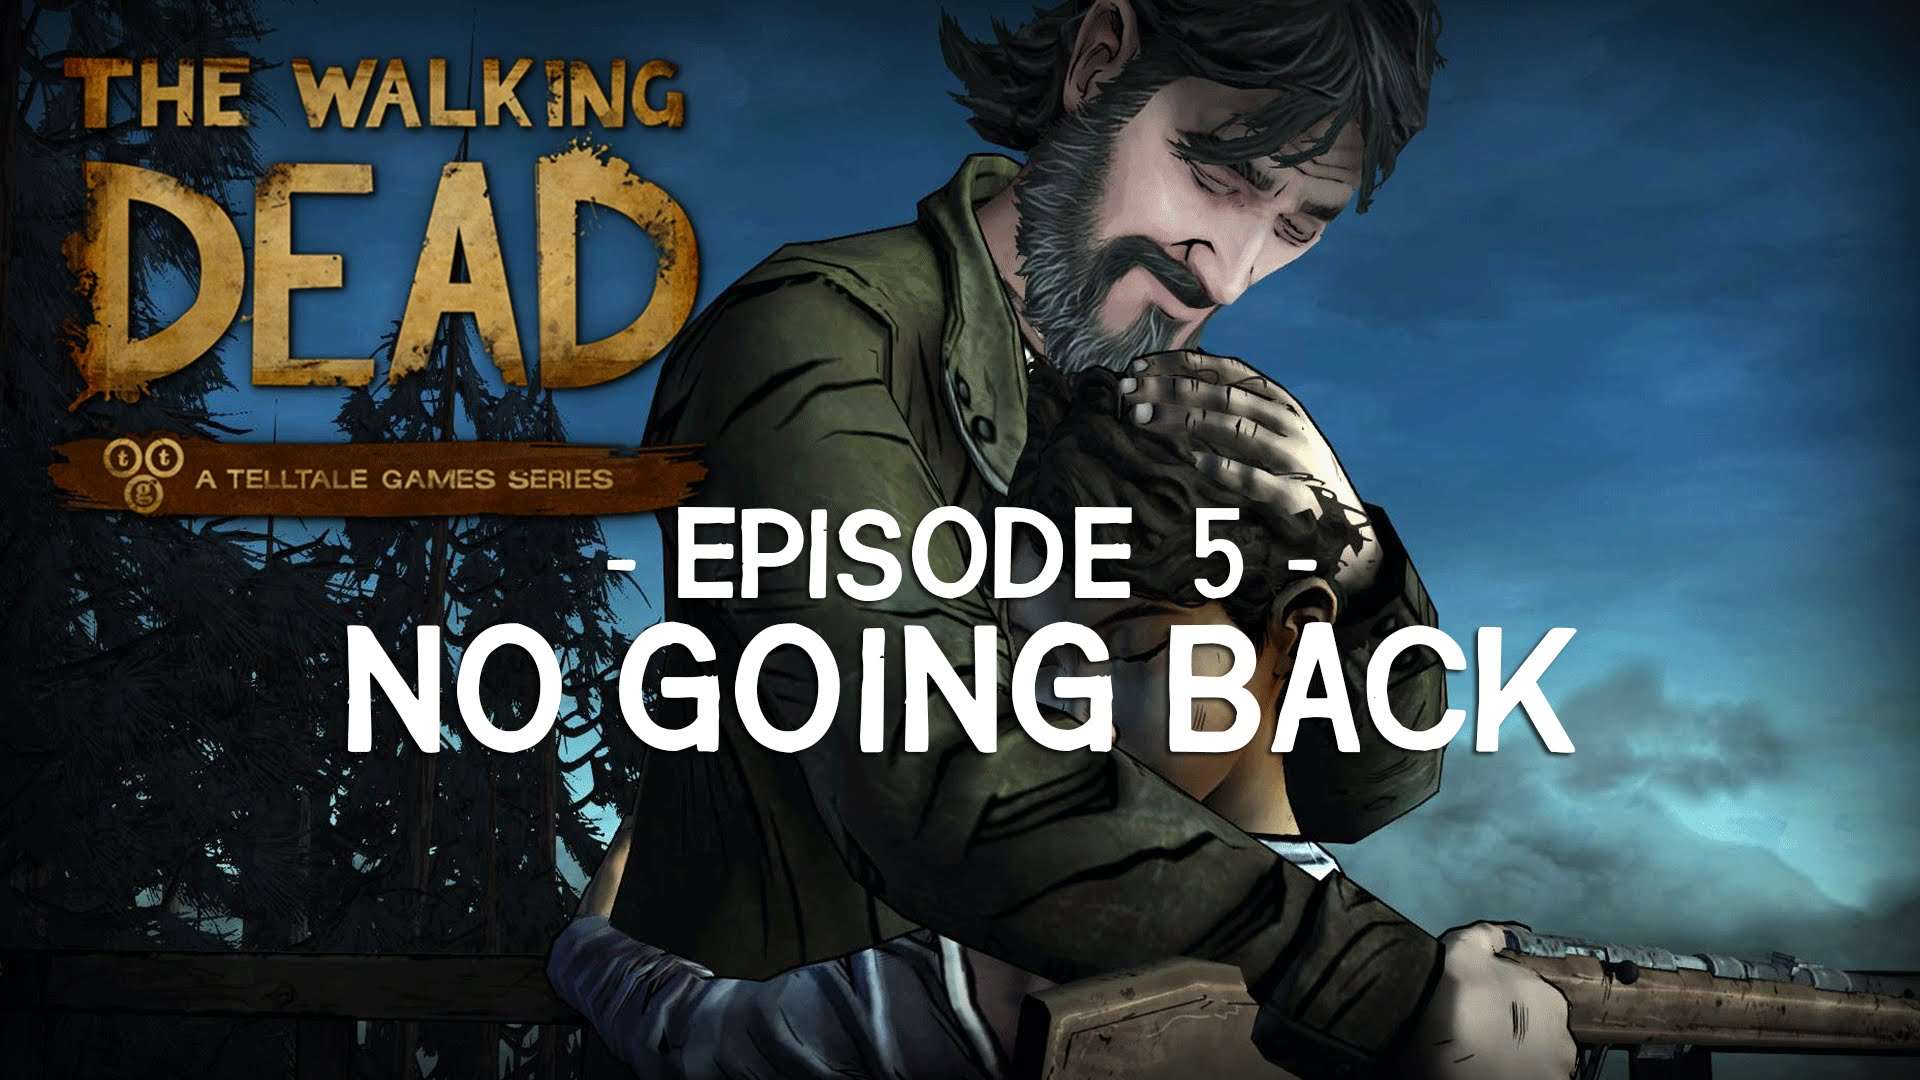 The walking dead season 1 episode 2 game download